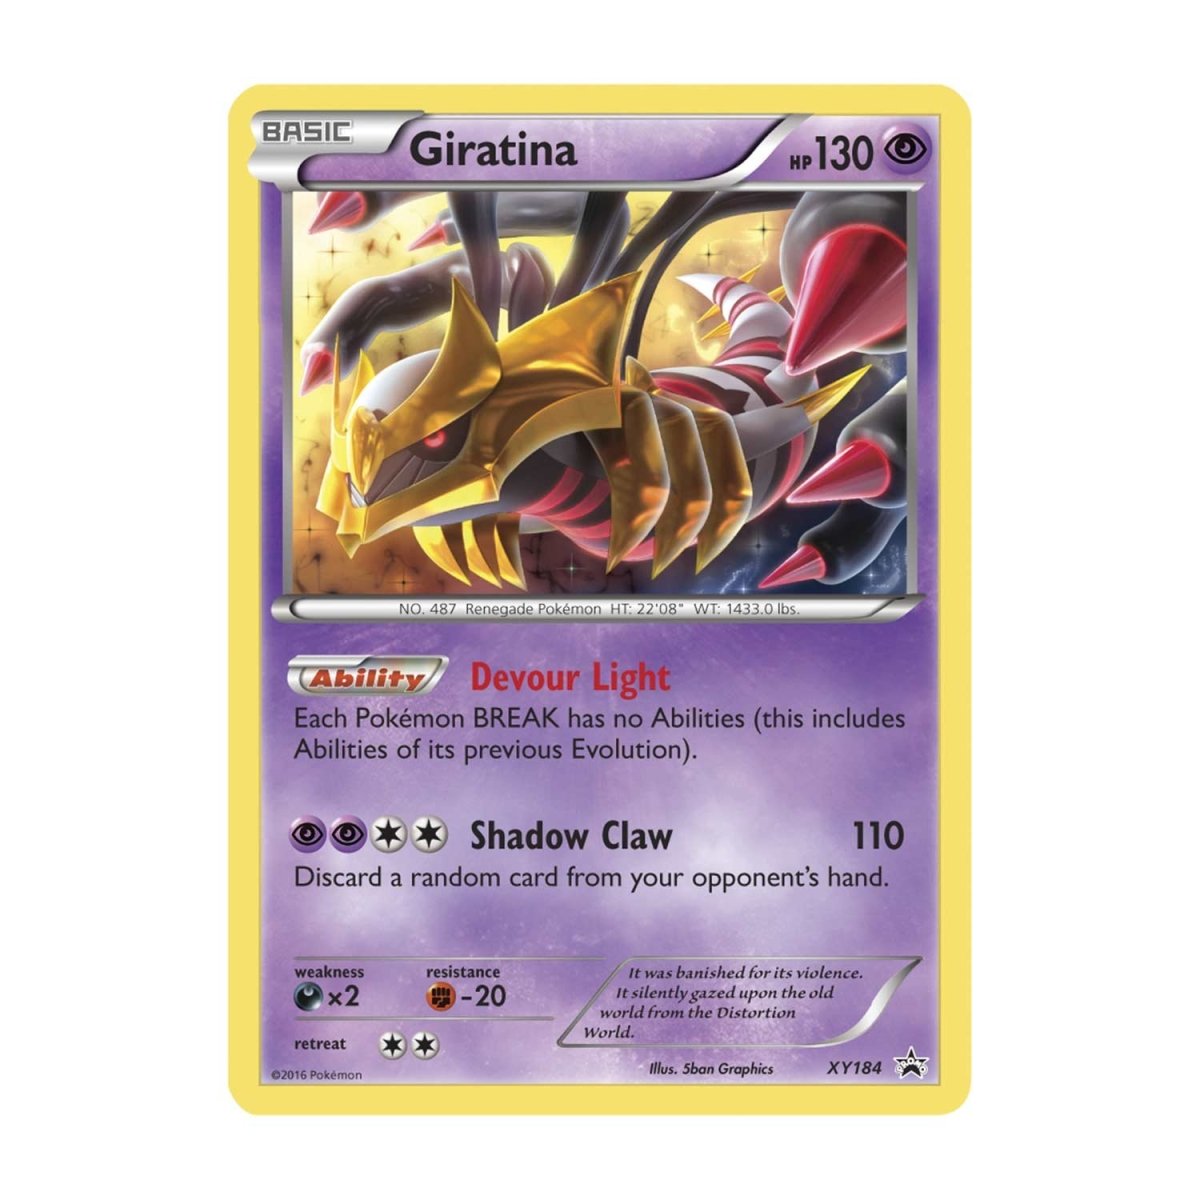 Giratina - Pokemon Card Prices & Trends